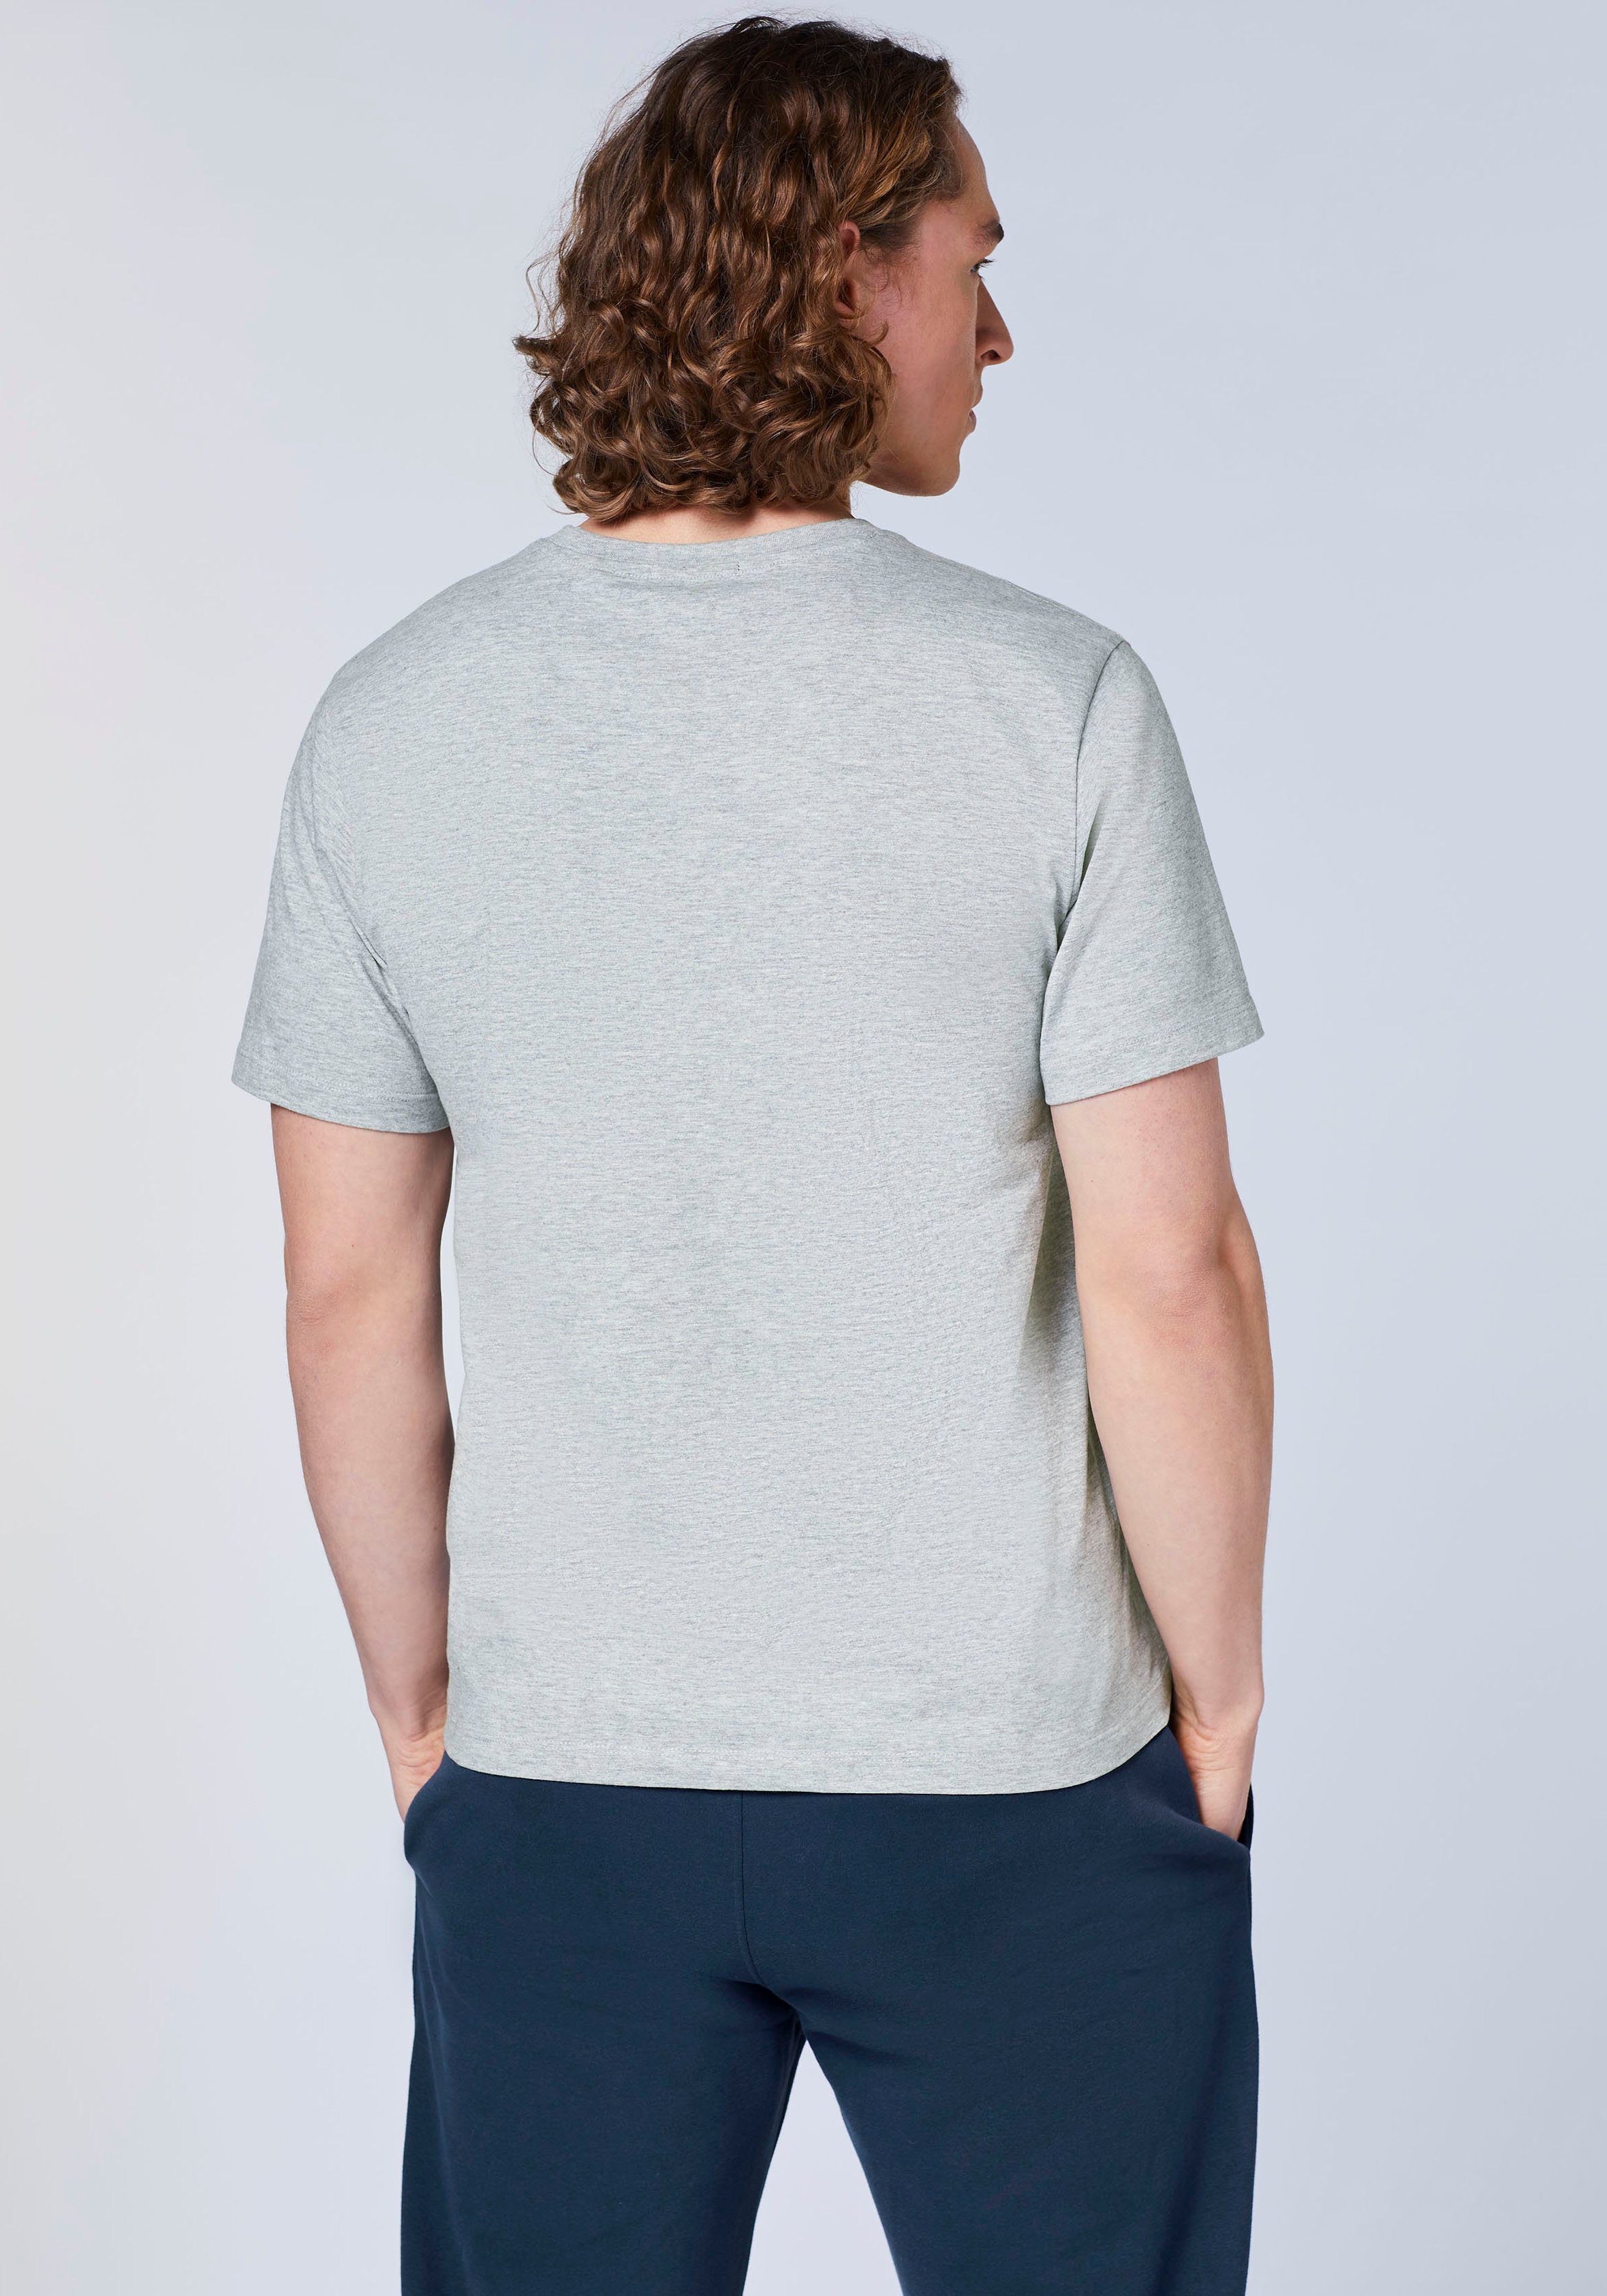 Neutral Gray T-Shirt Chiemsee